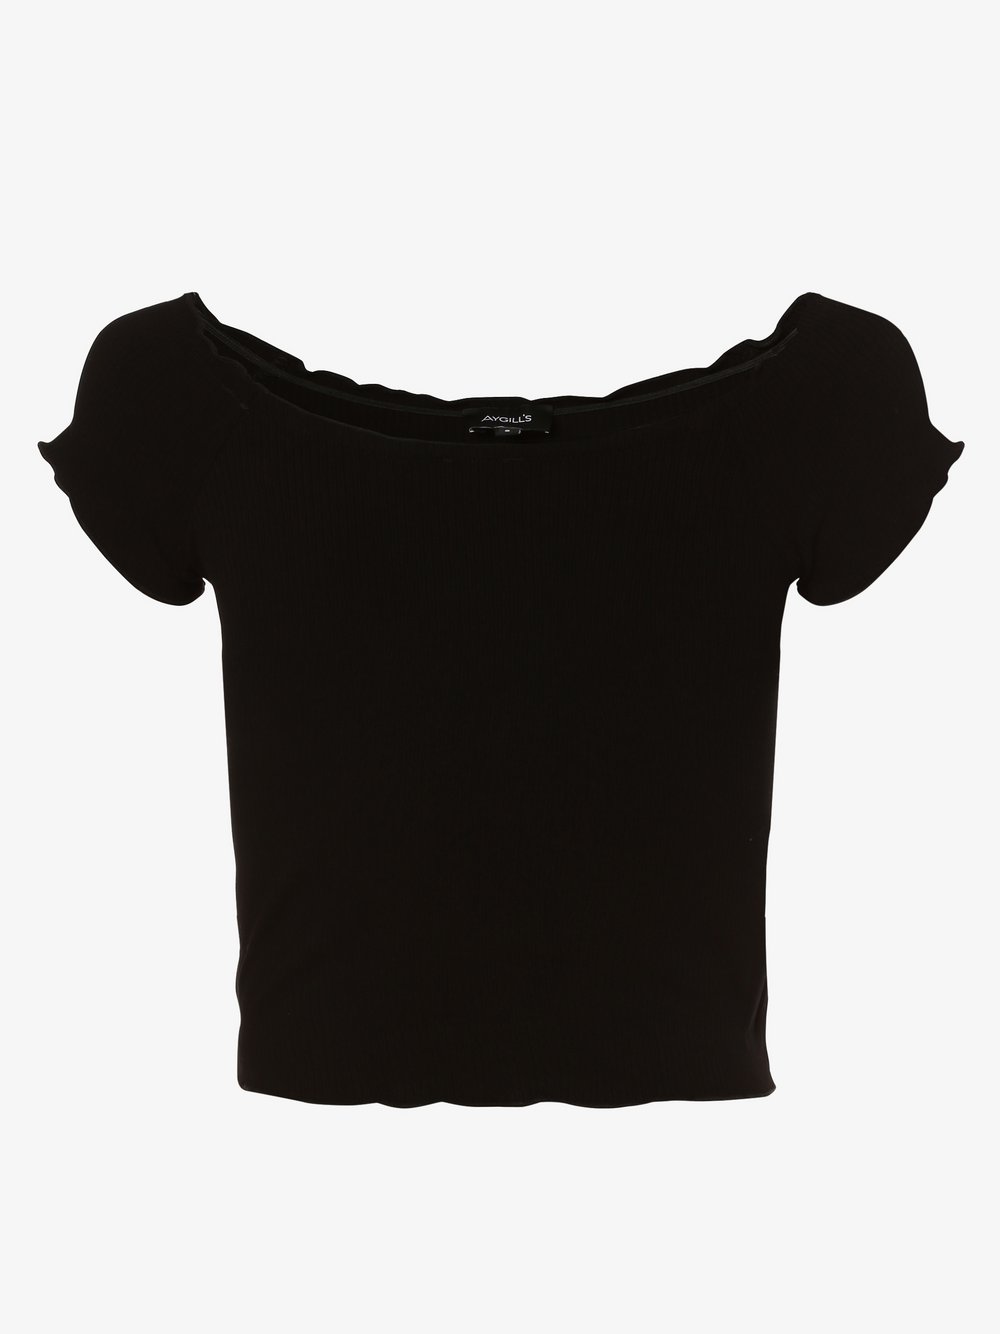 Aygill's - T-shirt damski, czarny